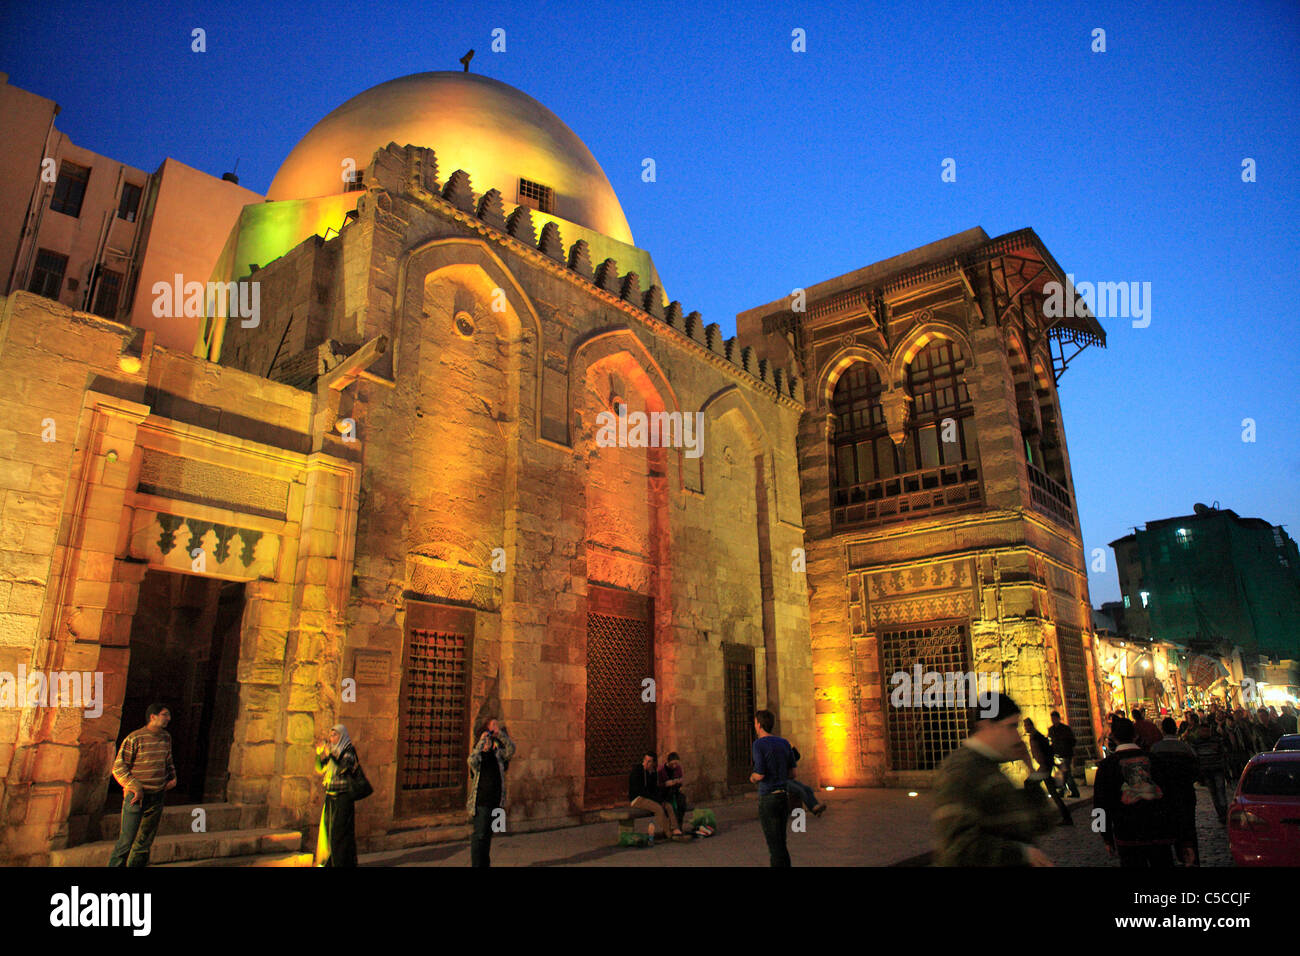 Sultan Qalawun mausoleum (1285) at night, Cairo, Egypt Stock Photo